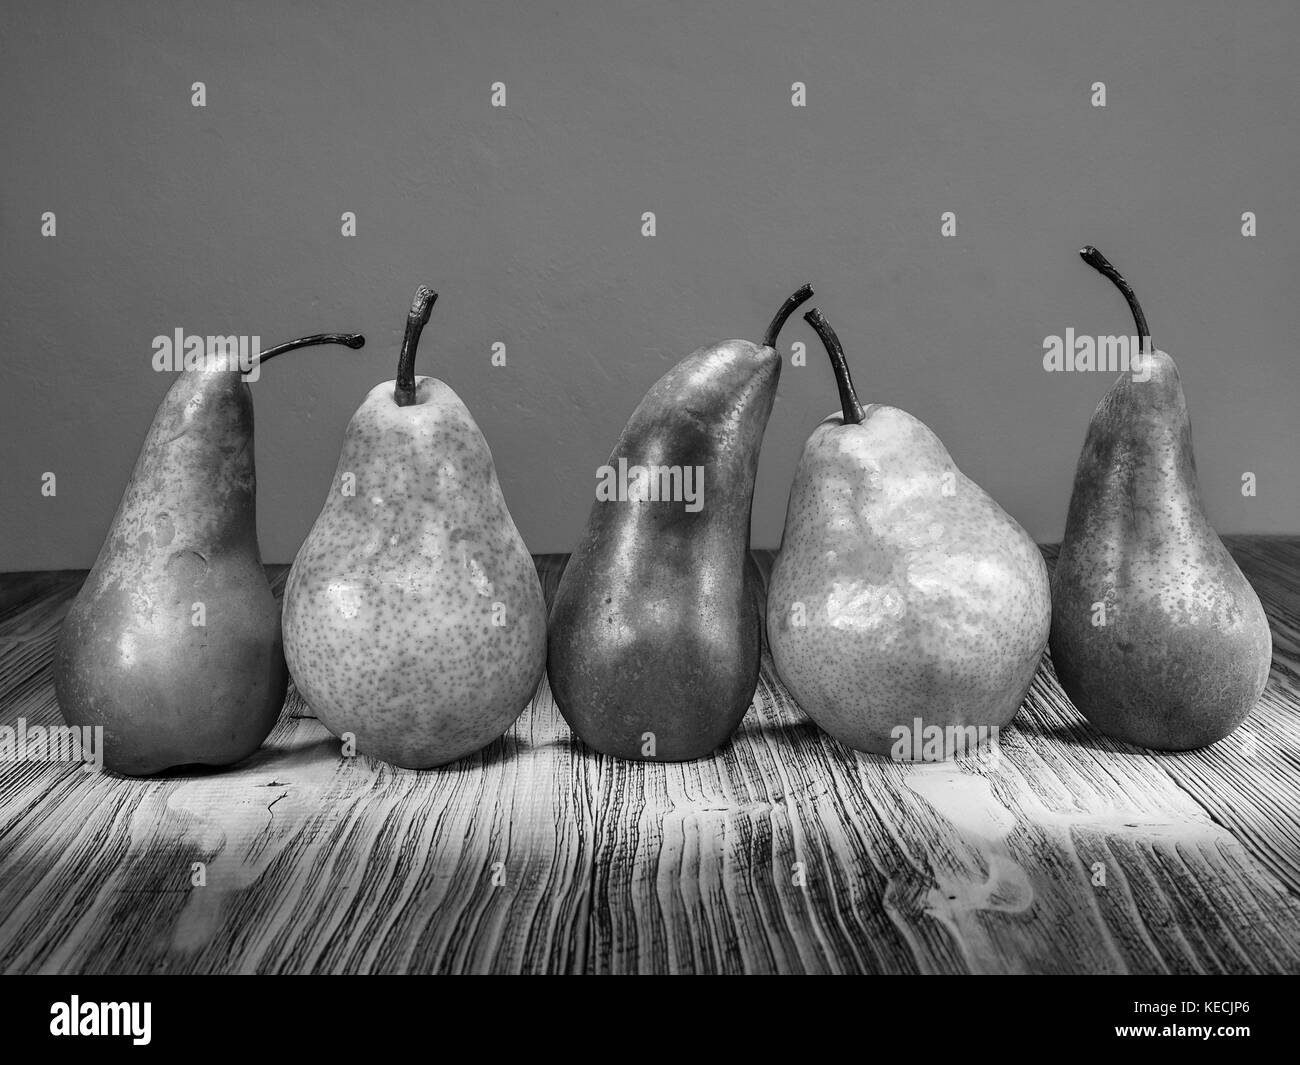 Pears harvest. Fruit background. Stock Photo